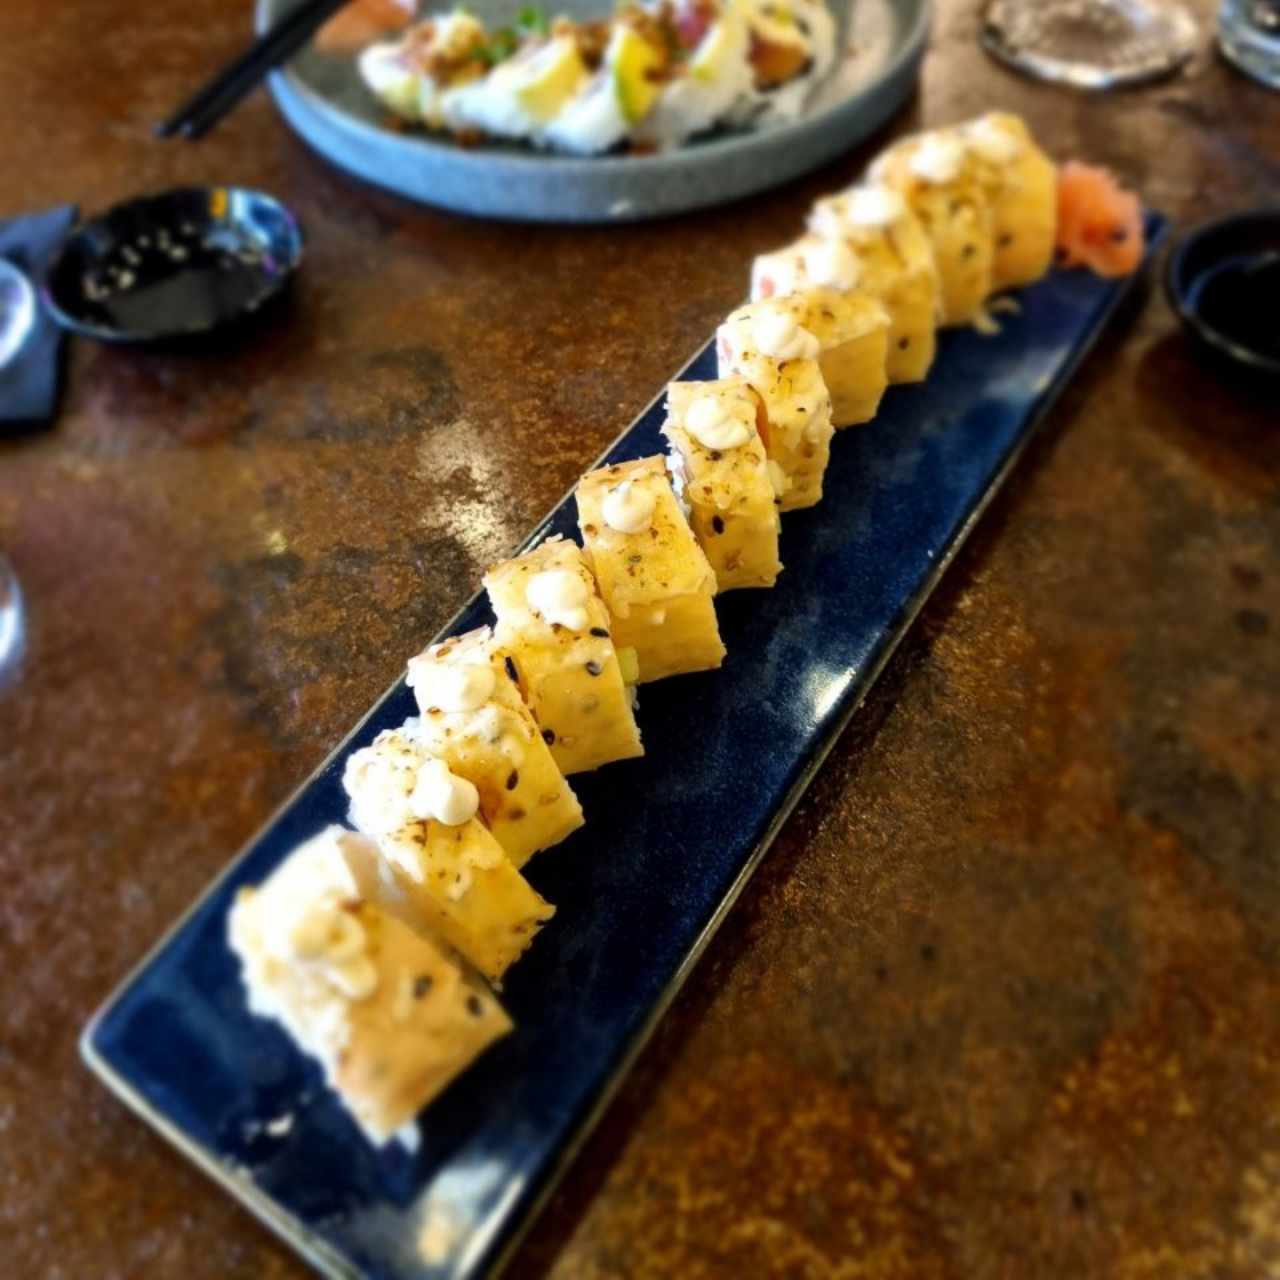 Sushi Rolls - Truffle Keto roll